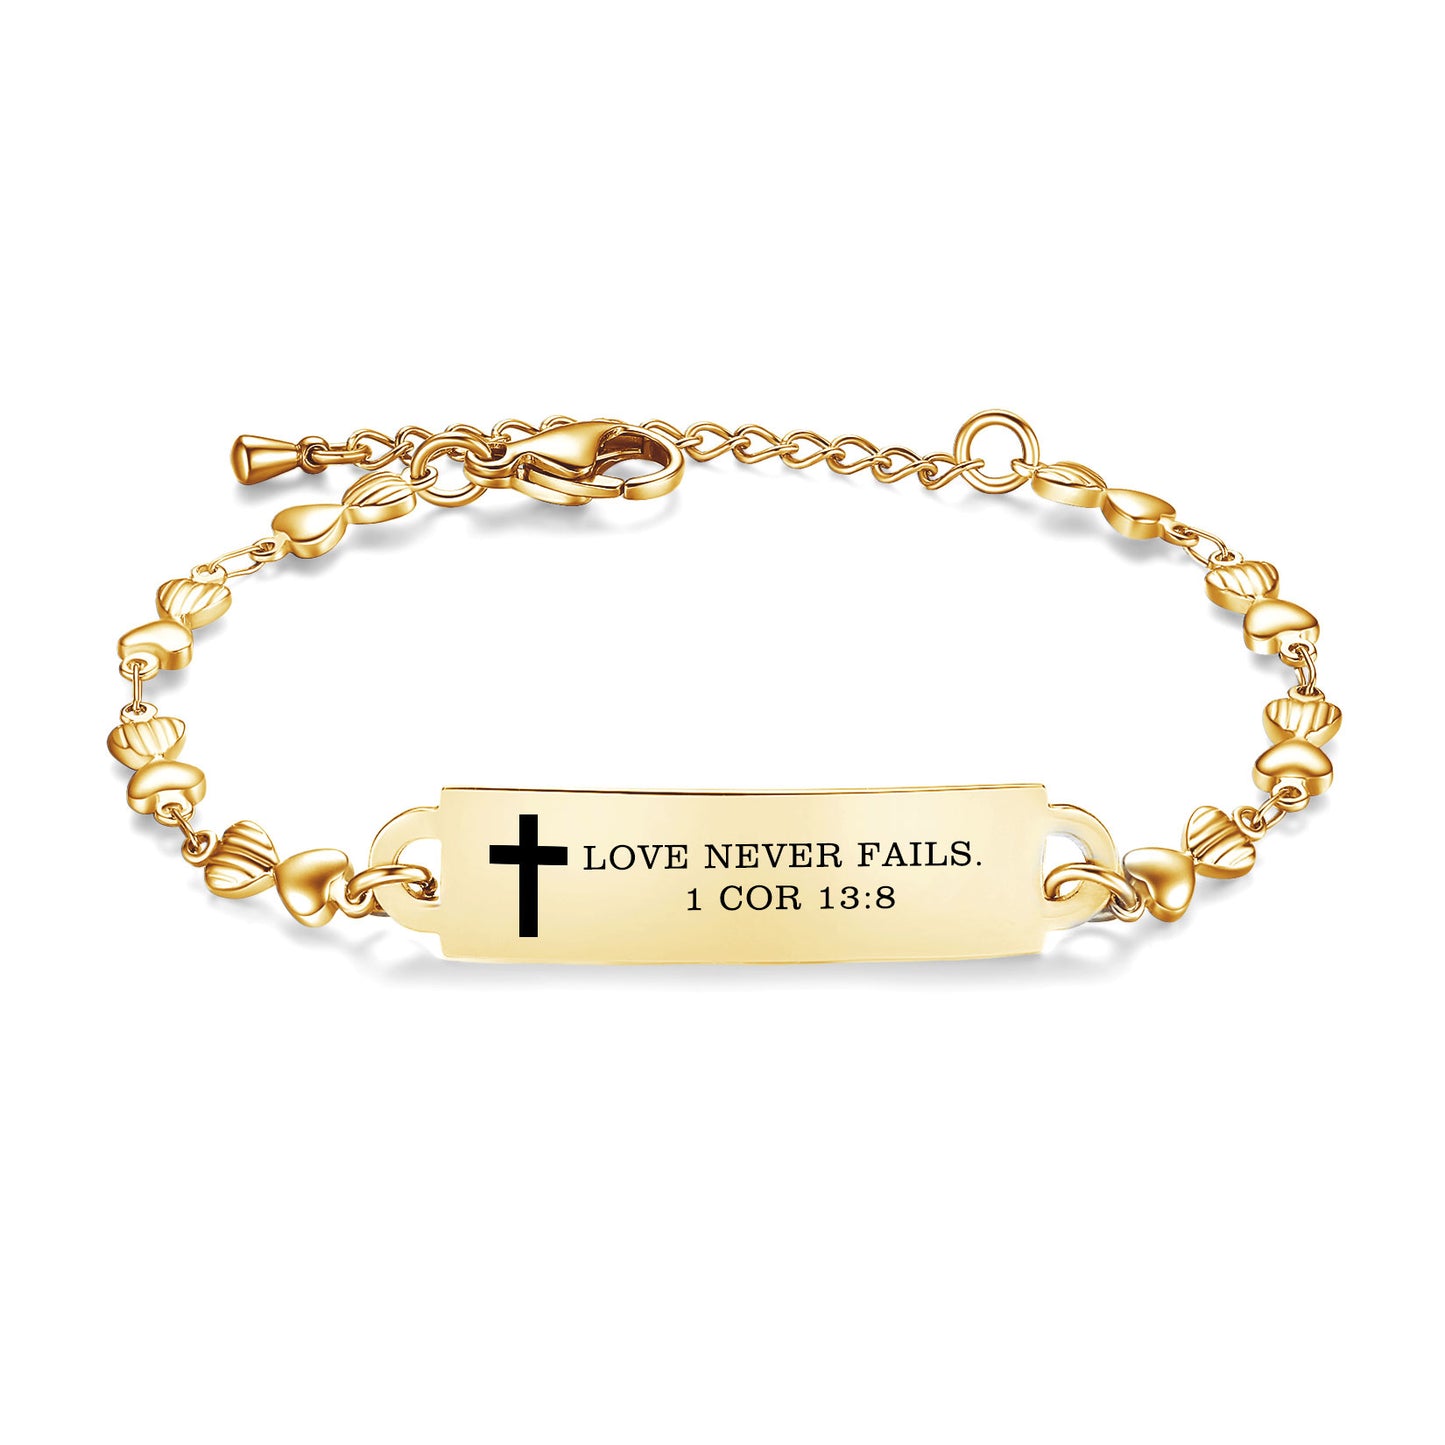 linnalove Bible Verse Bracelets,Christmas Gift -Adjustable Stainless Steel heart chain Faith Christian Mantra Quotes Engraved Bracelet for Women